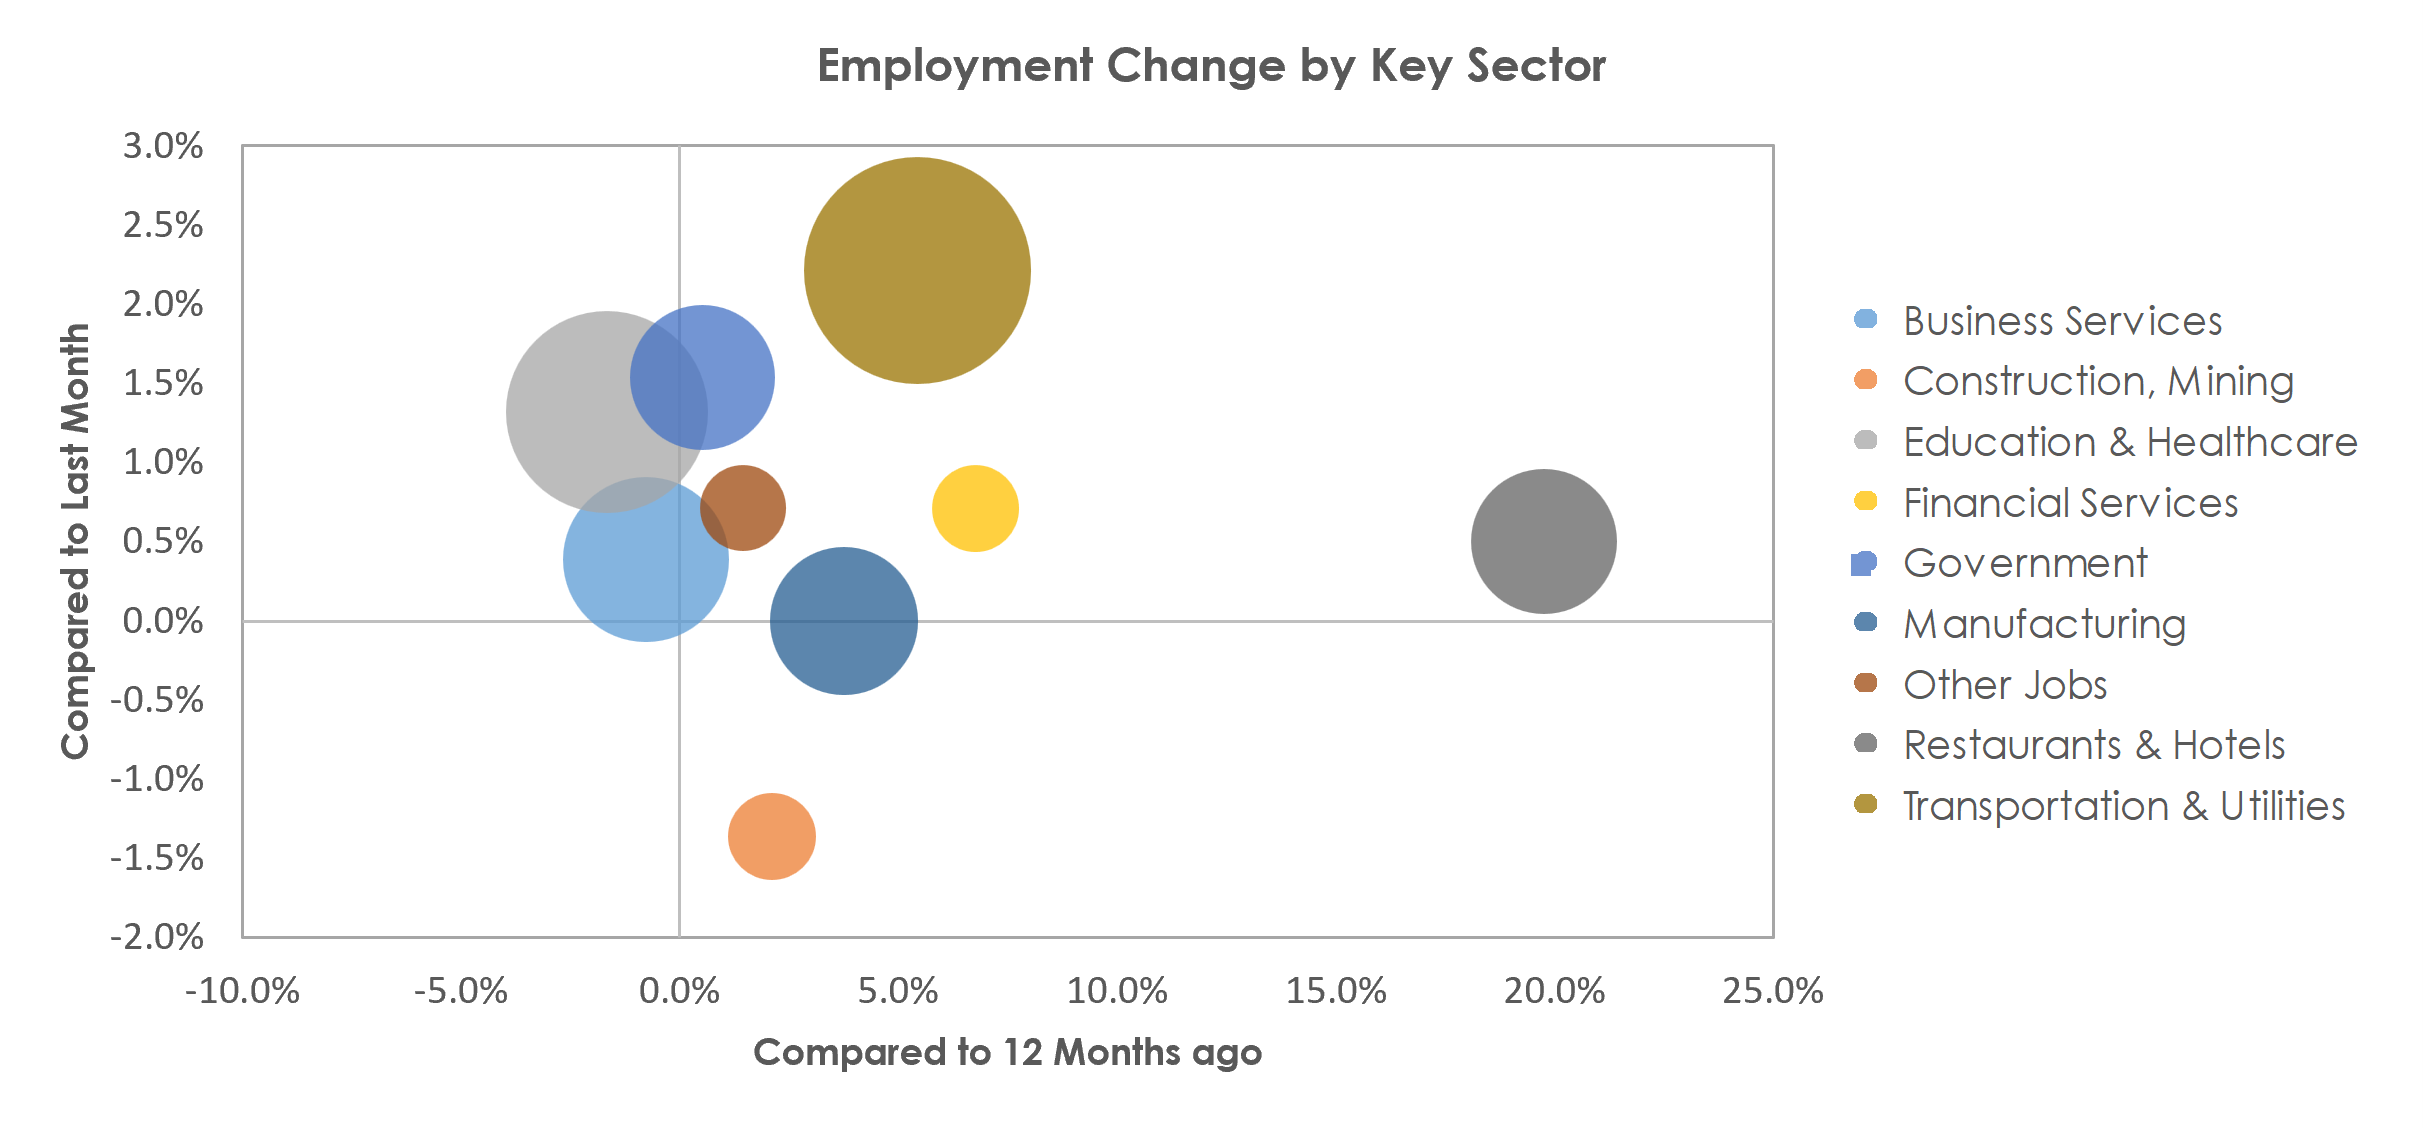 Allentown-Bethlehem-Easton, PA-NJ Unemployment by Industry October 2022